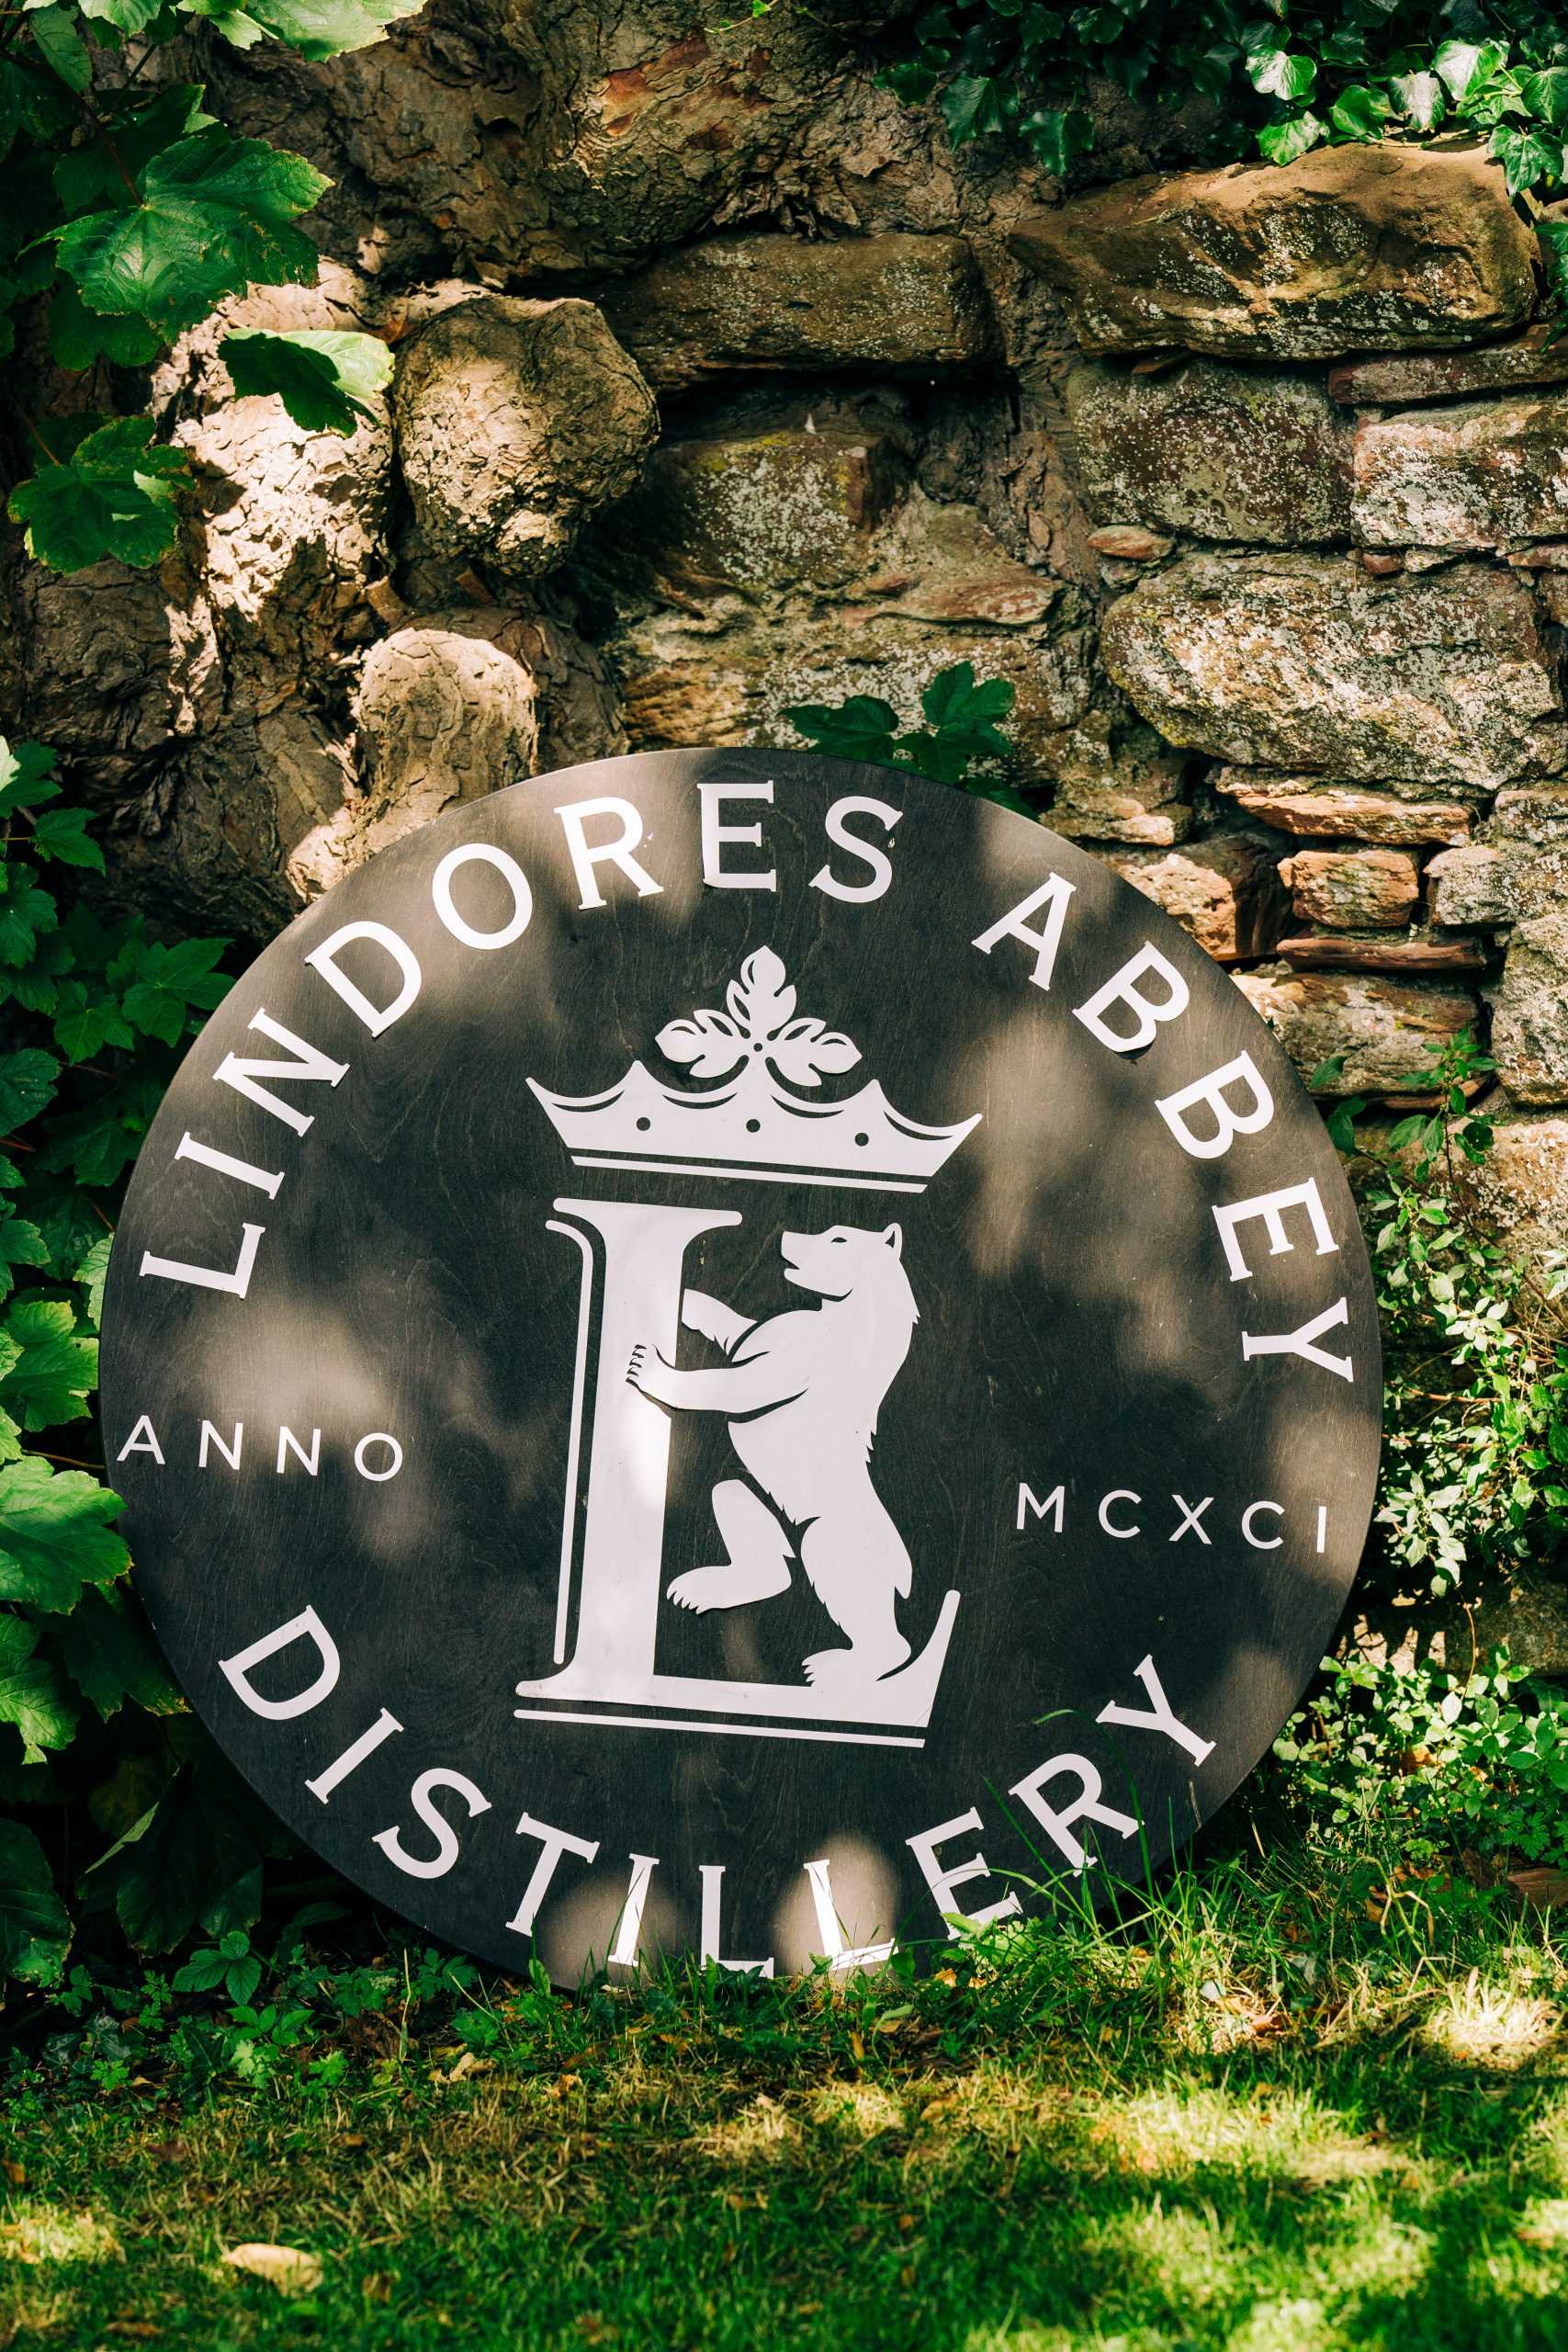 Lindores abbey — колыбель виски